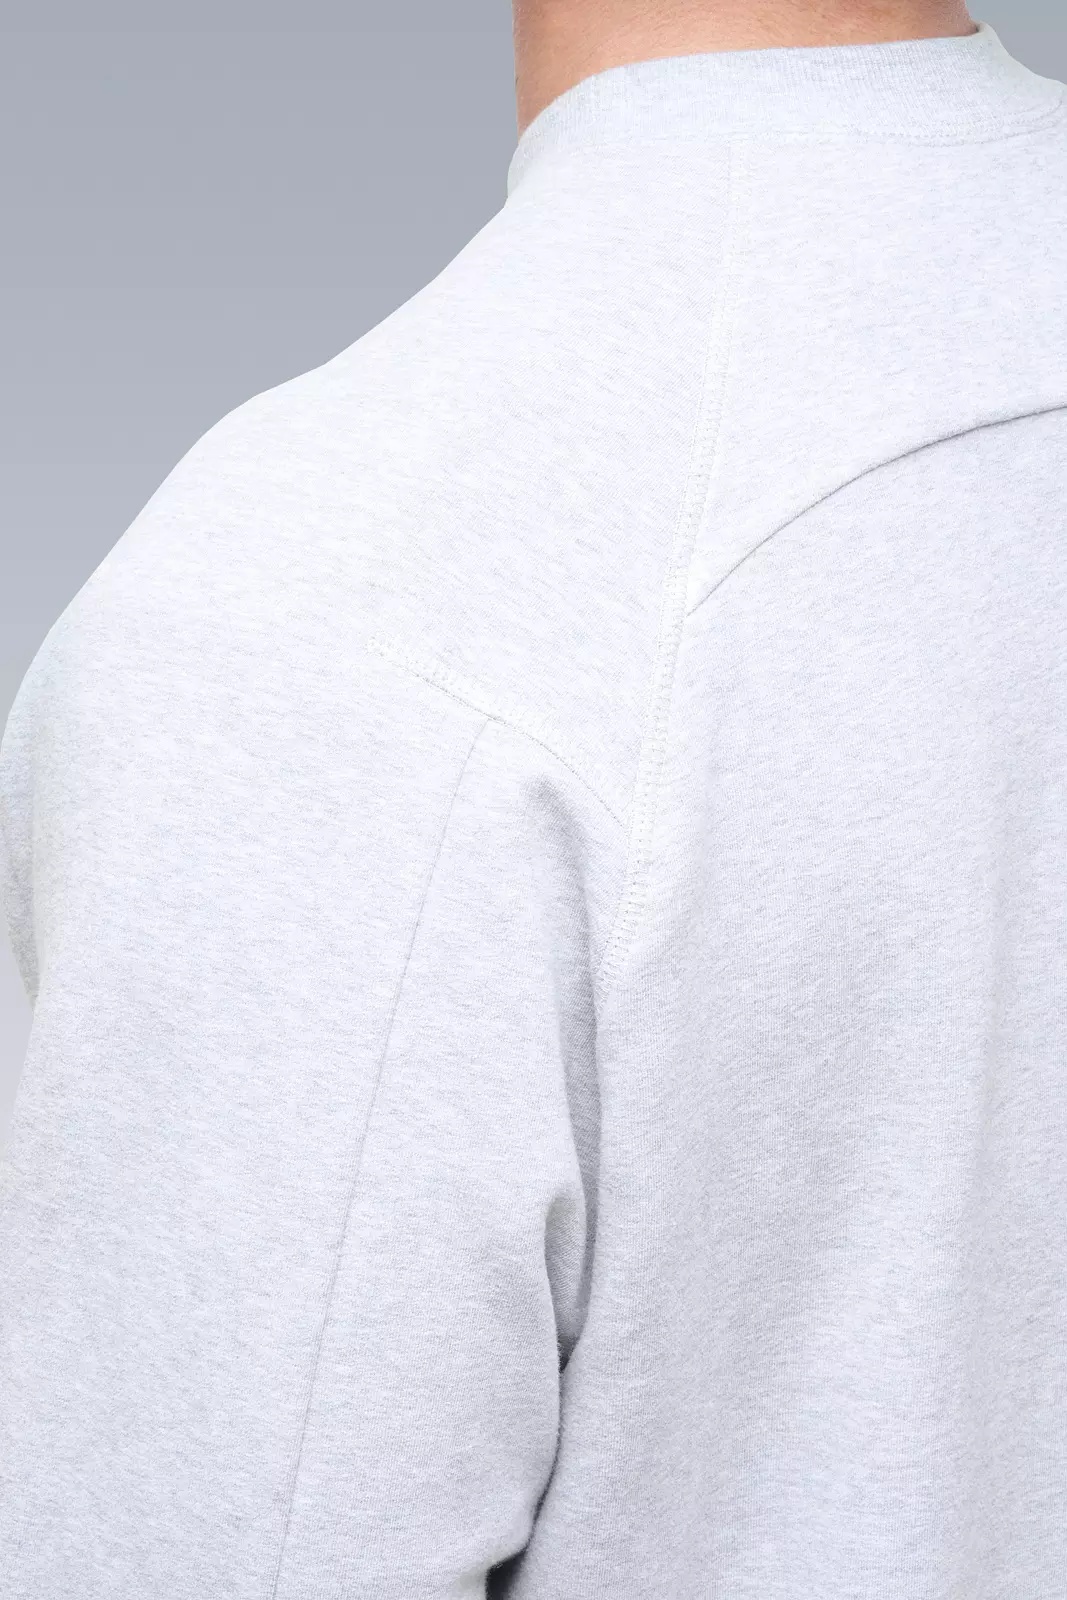 S14-BR Cotton Crewneck Sweatshirt Gray Melange - 11